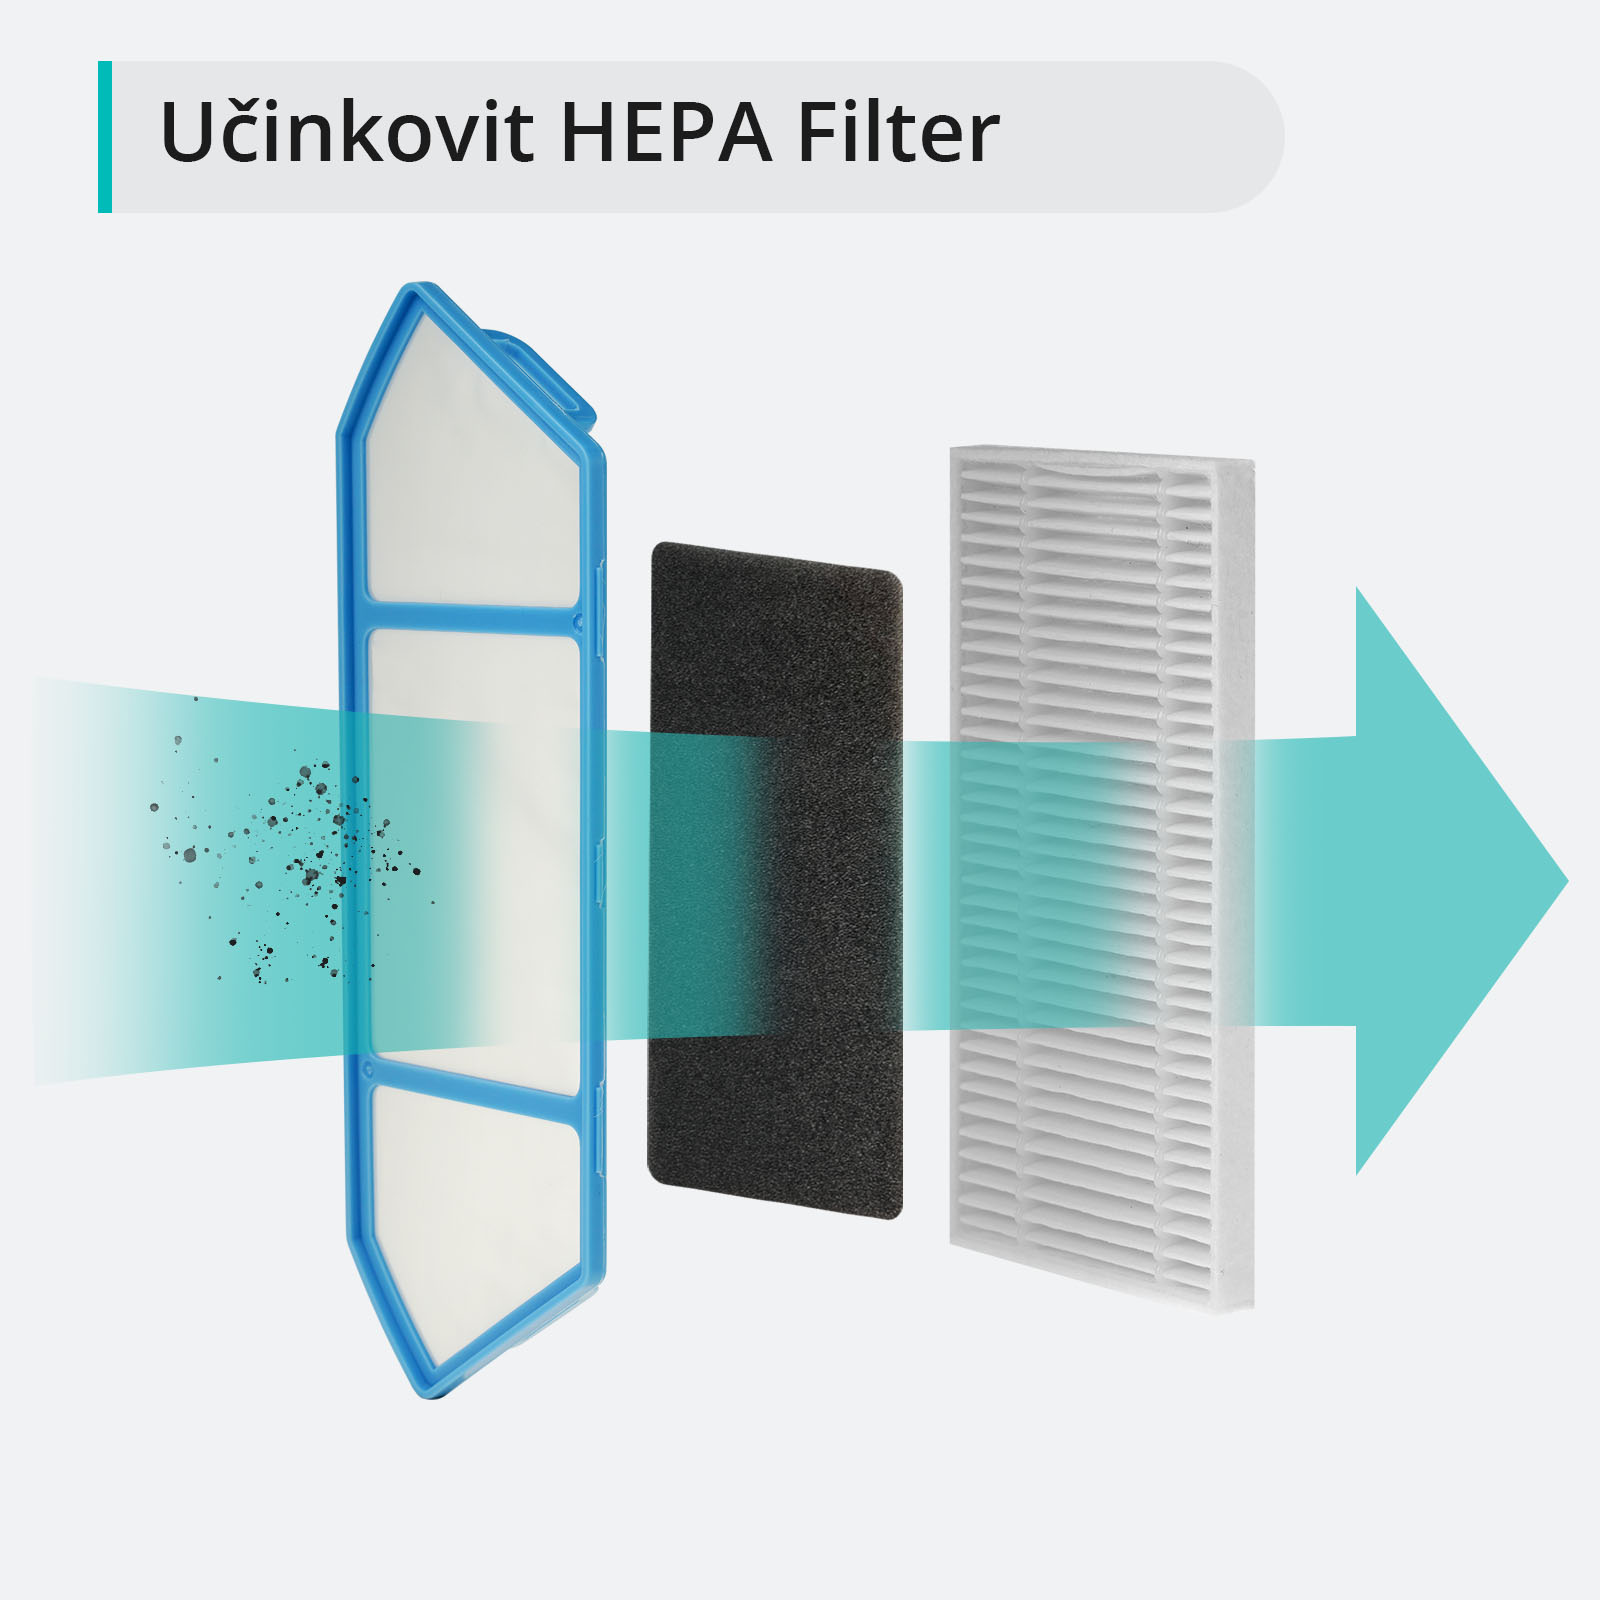 Učinkovit HEPA Filter